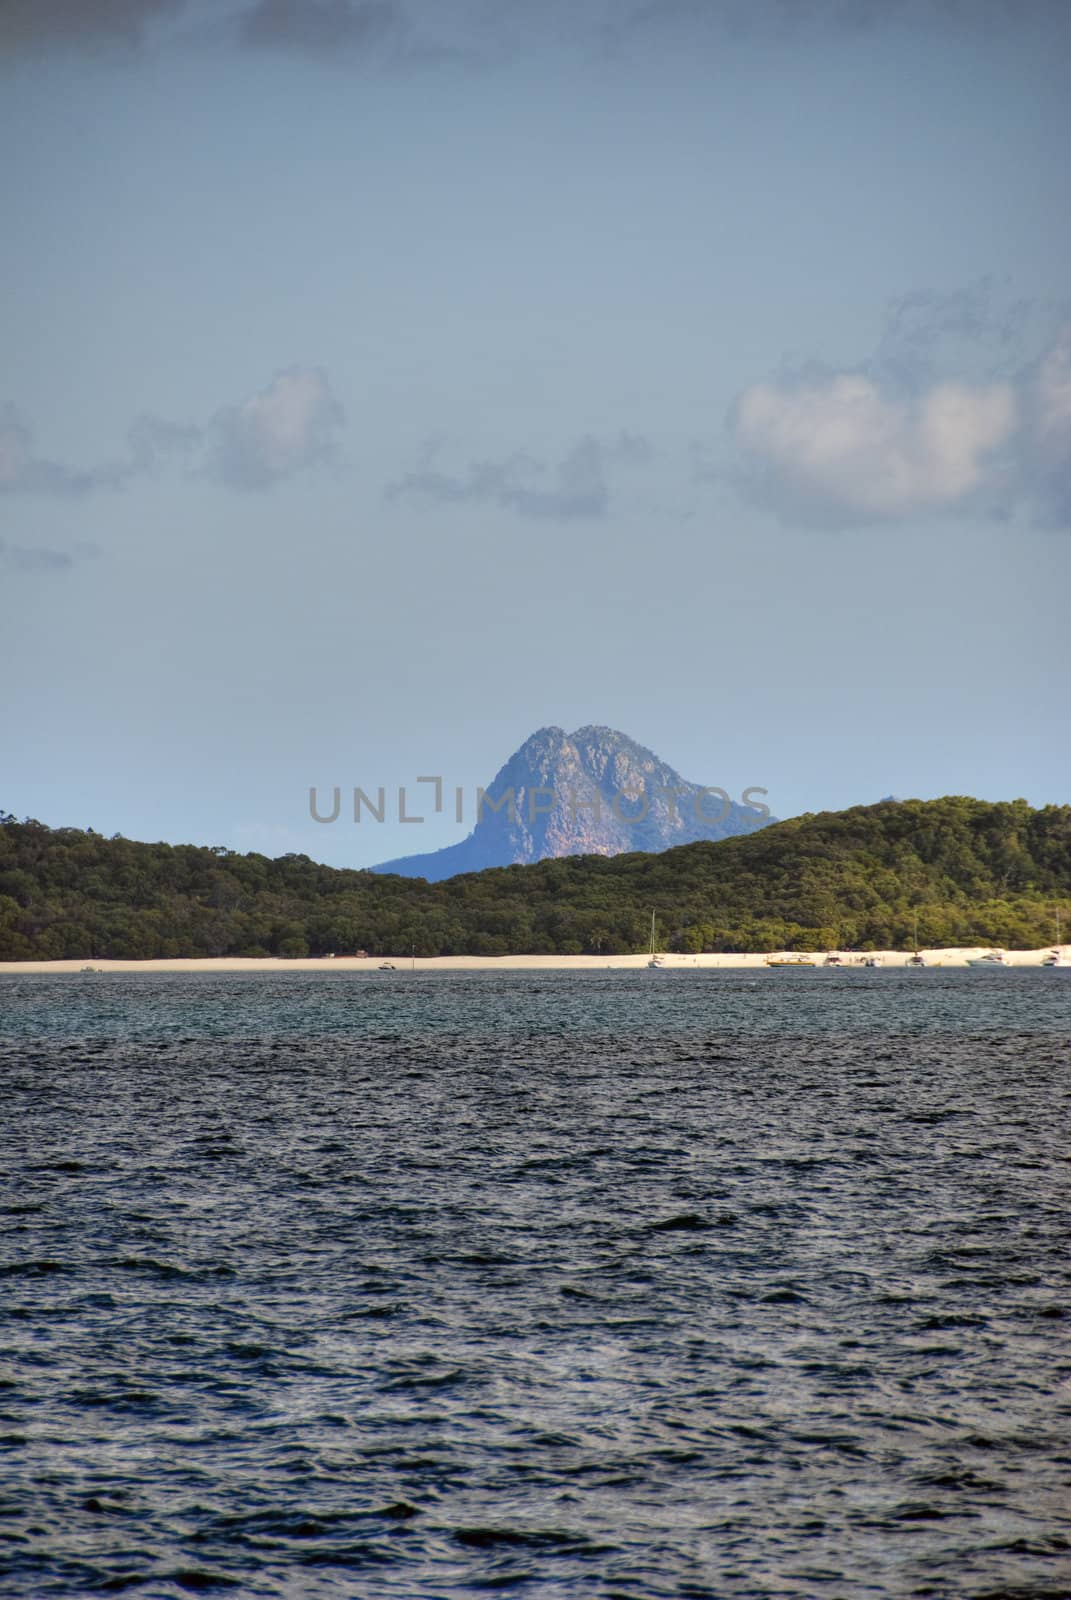 Whitsunday Islands, Queensland, Australia by jovannig